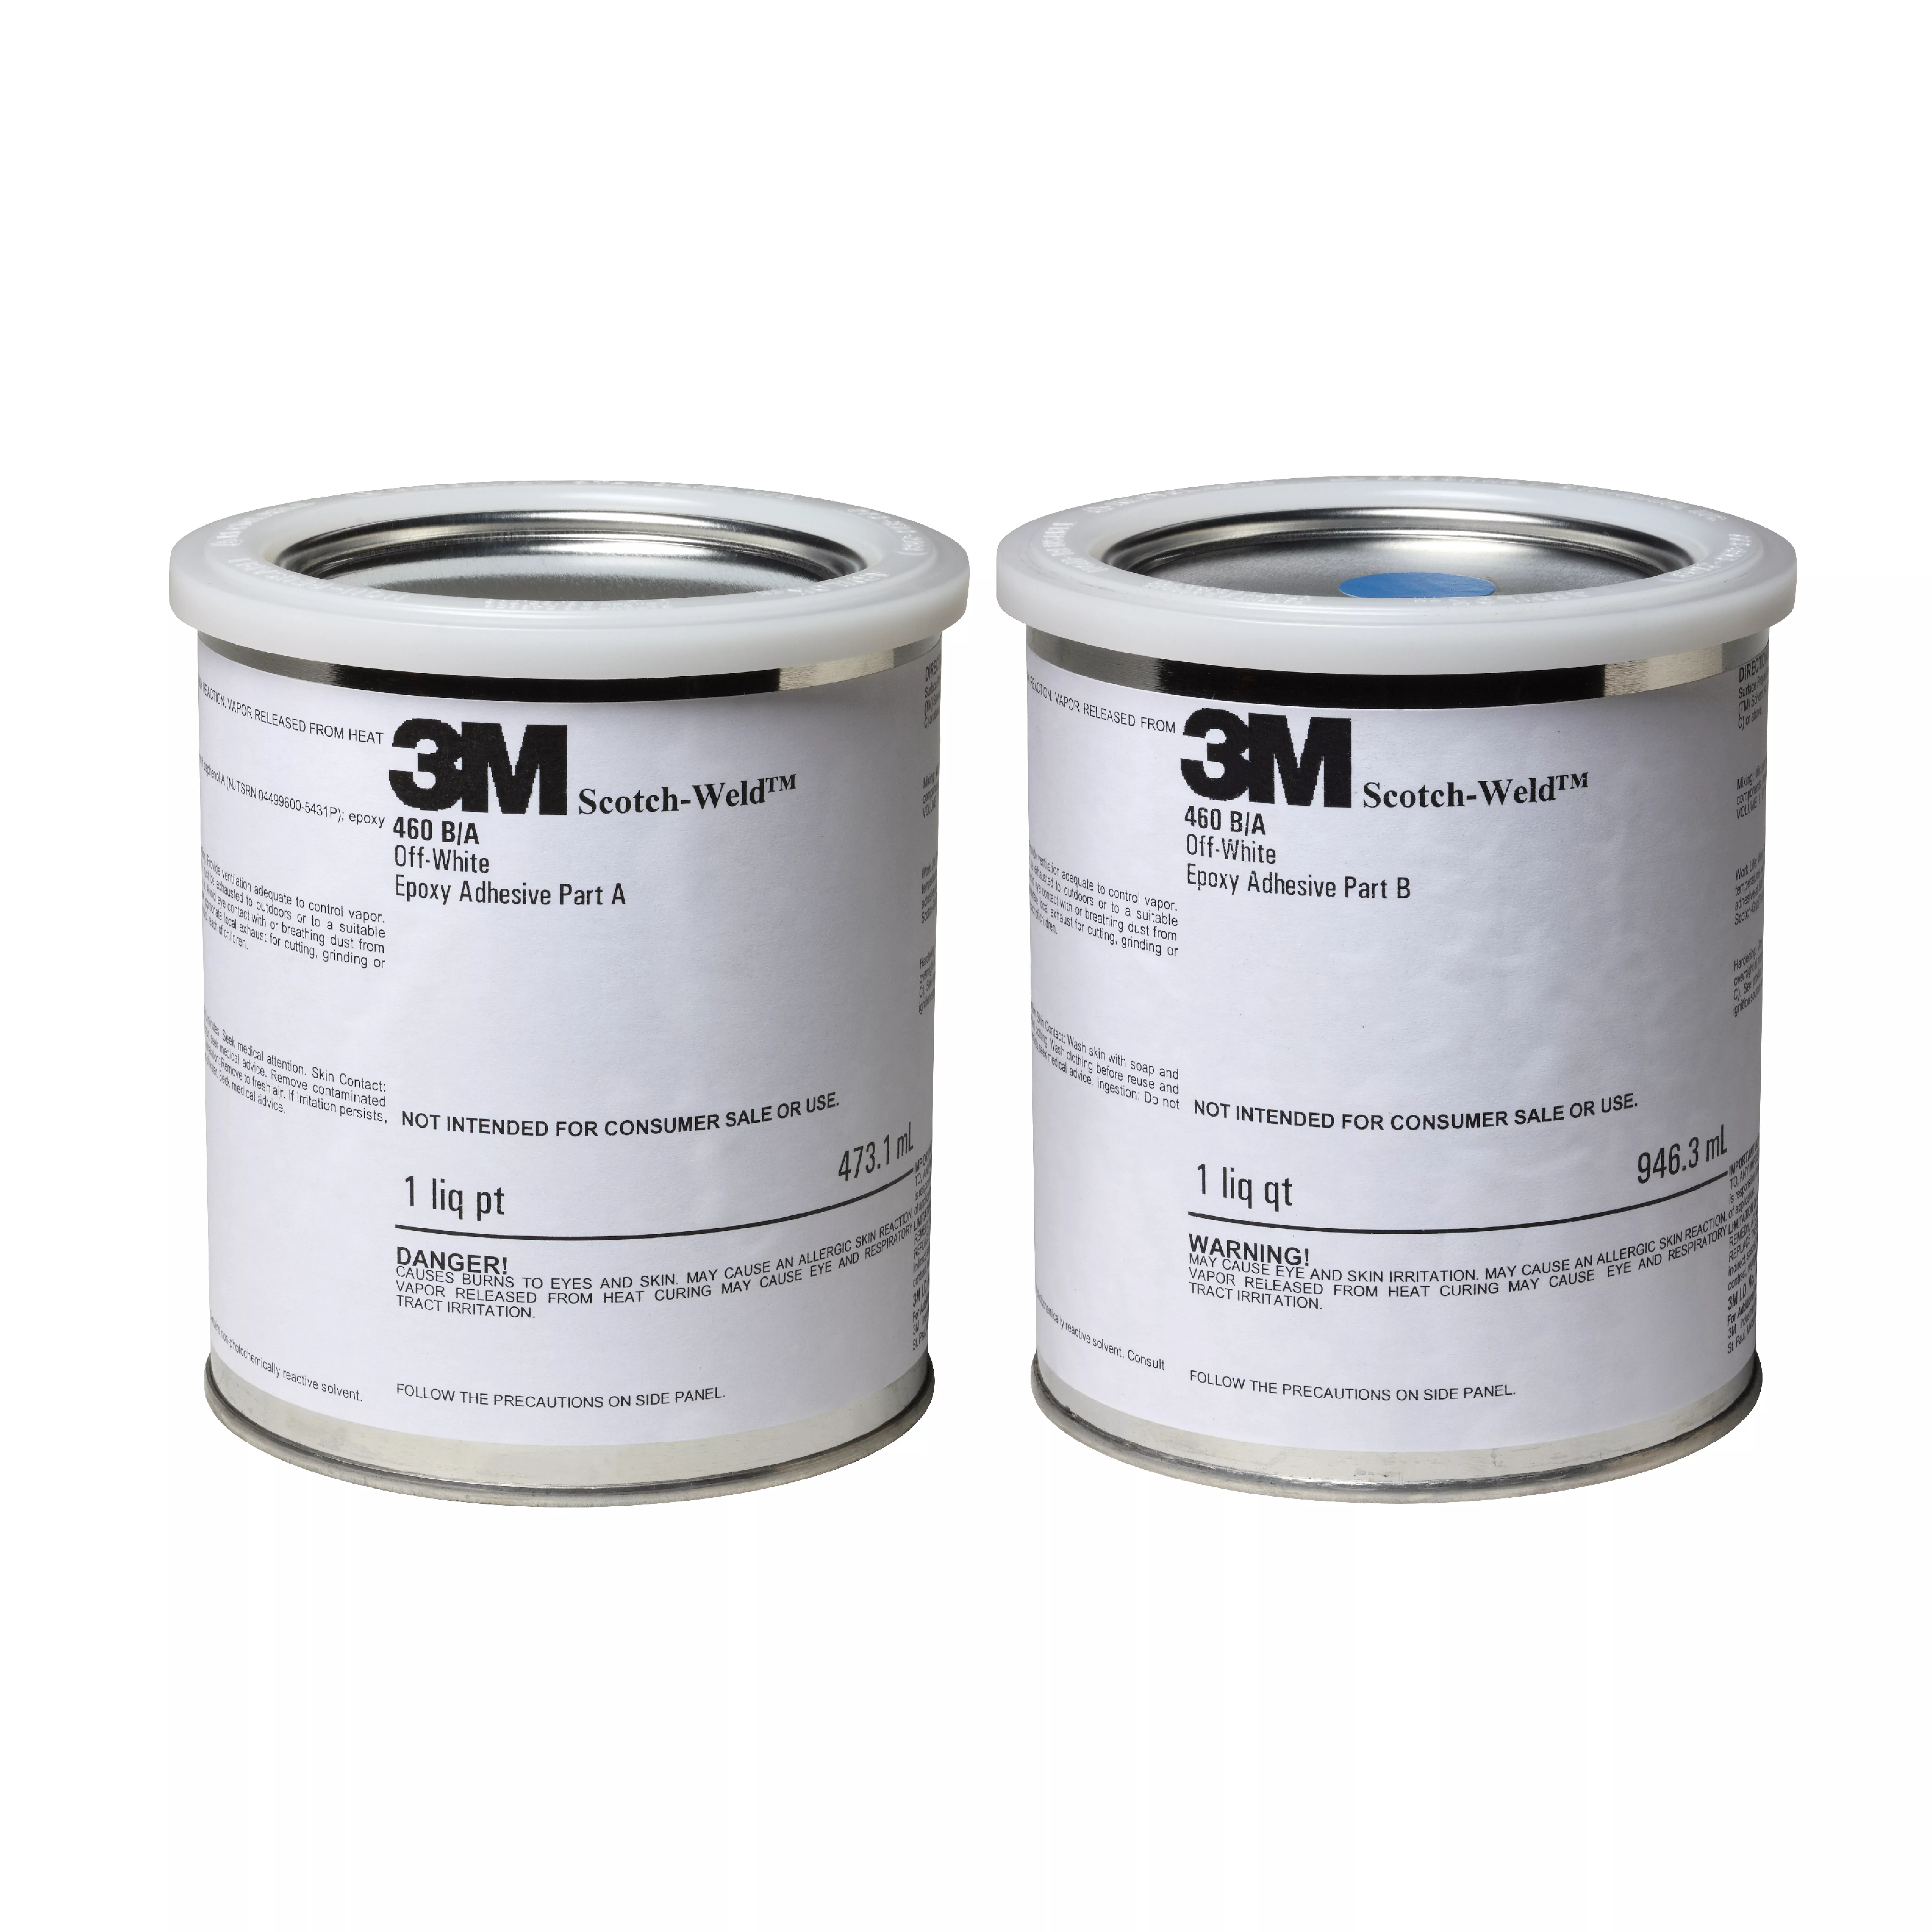 3M™ Scotch-Weld™ Epoxy Adhesive 460, Off-White, Part B/A, 1.5 Quart, 6 Kit/Case